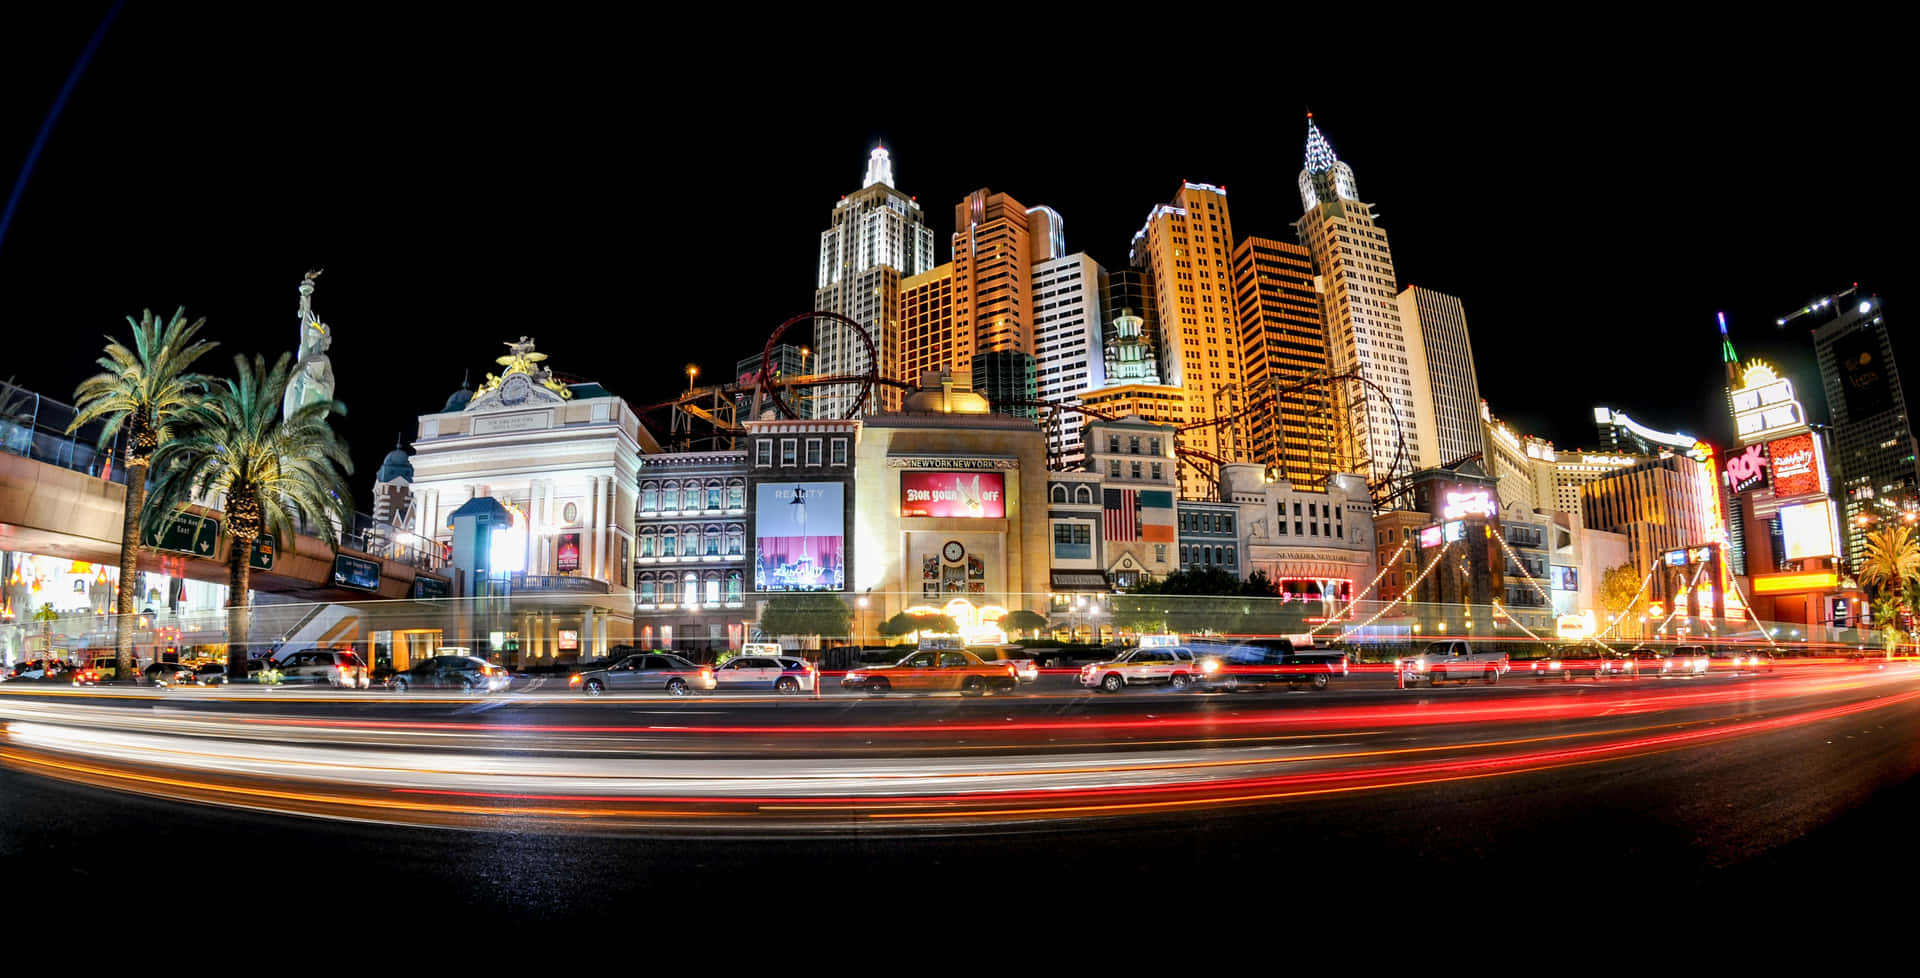 Enjoy stunning views of the Las Vegas Strip.